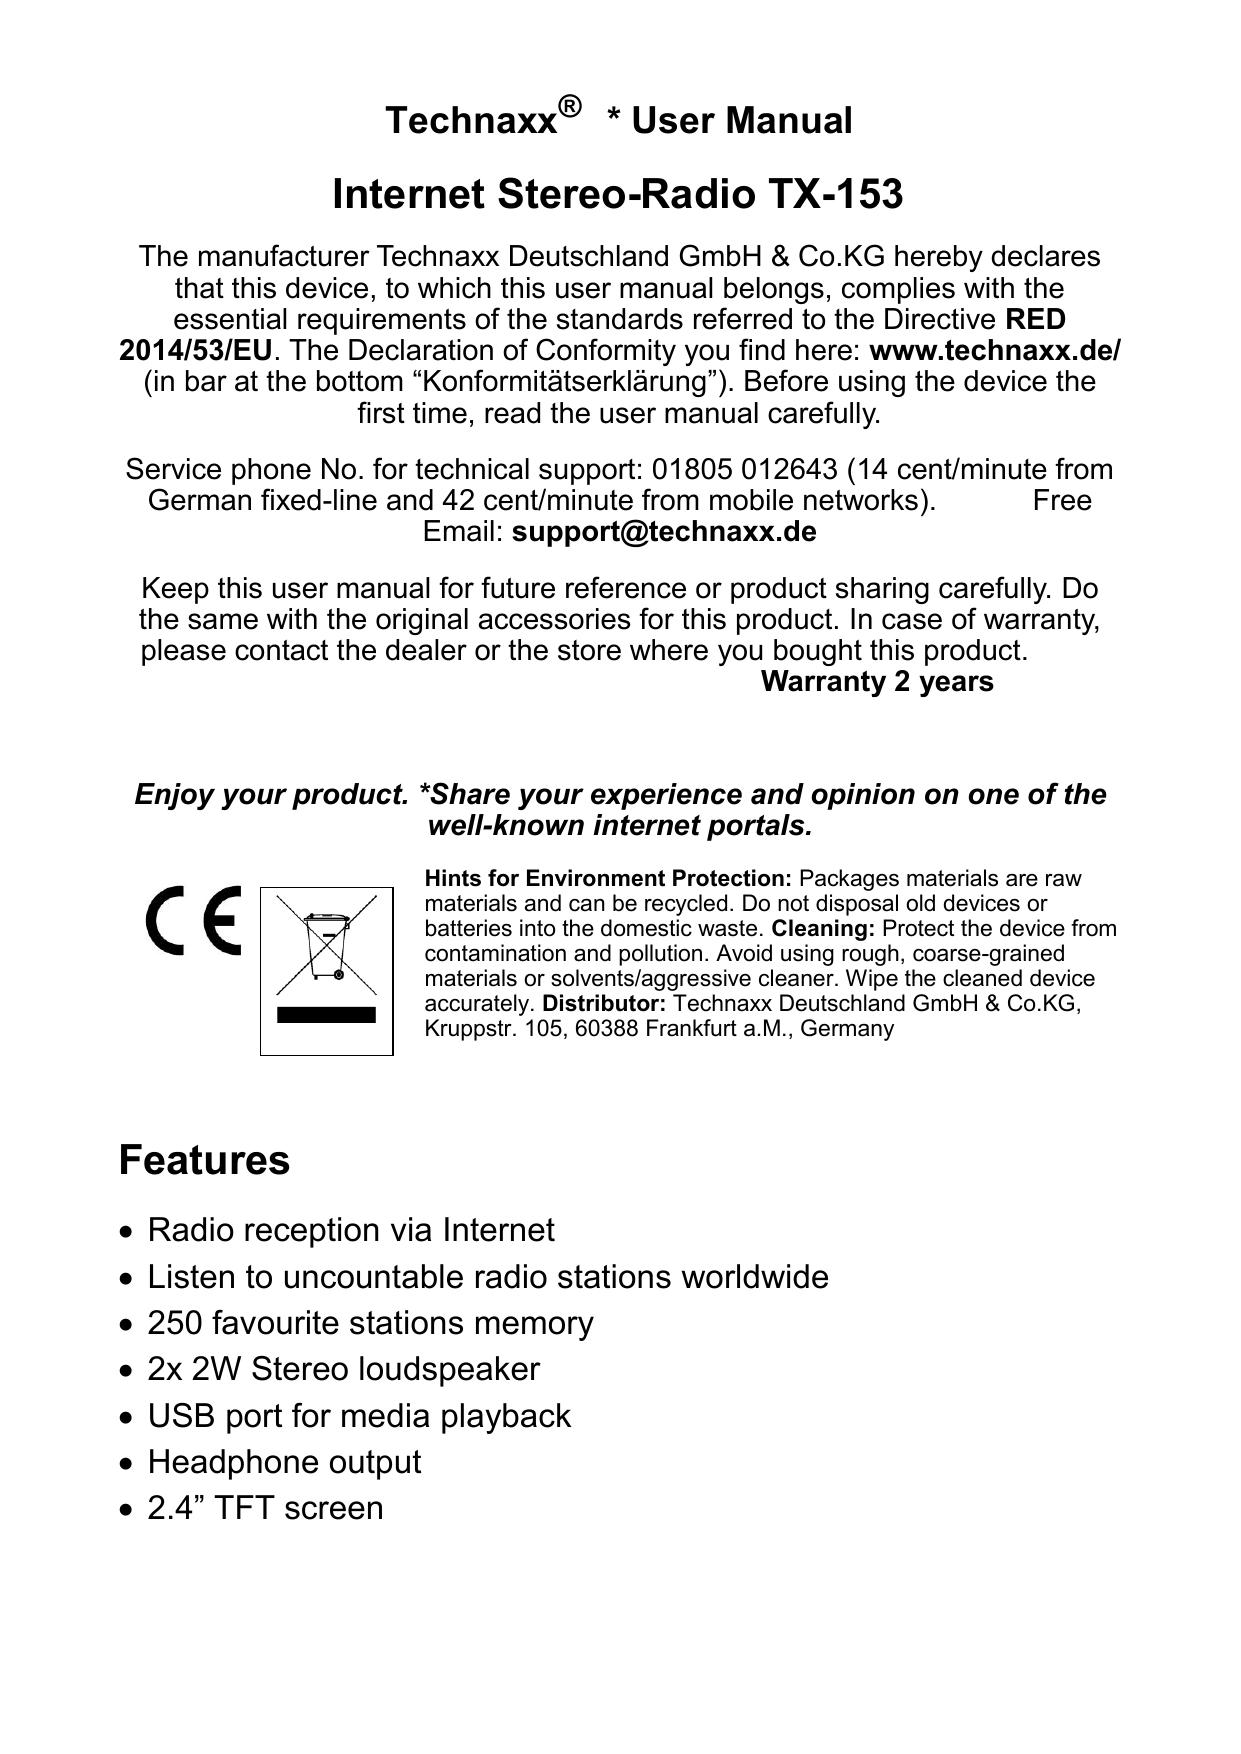 Technaxx TX-153 Internetradio Owner\'s Manual | Manualzz